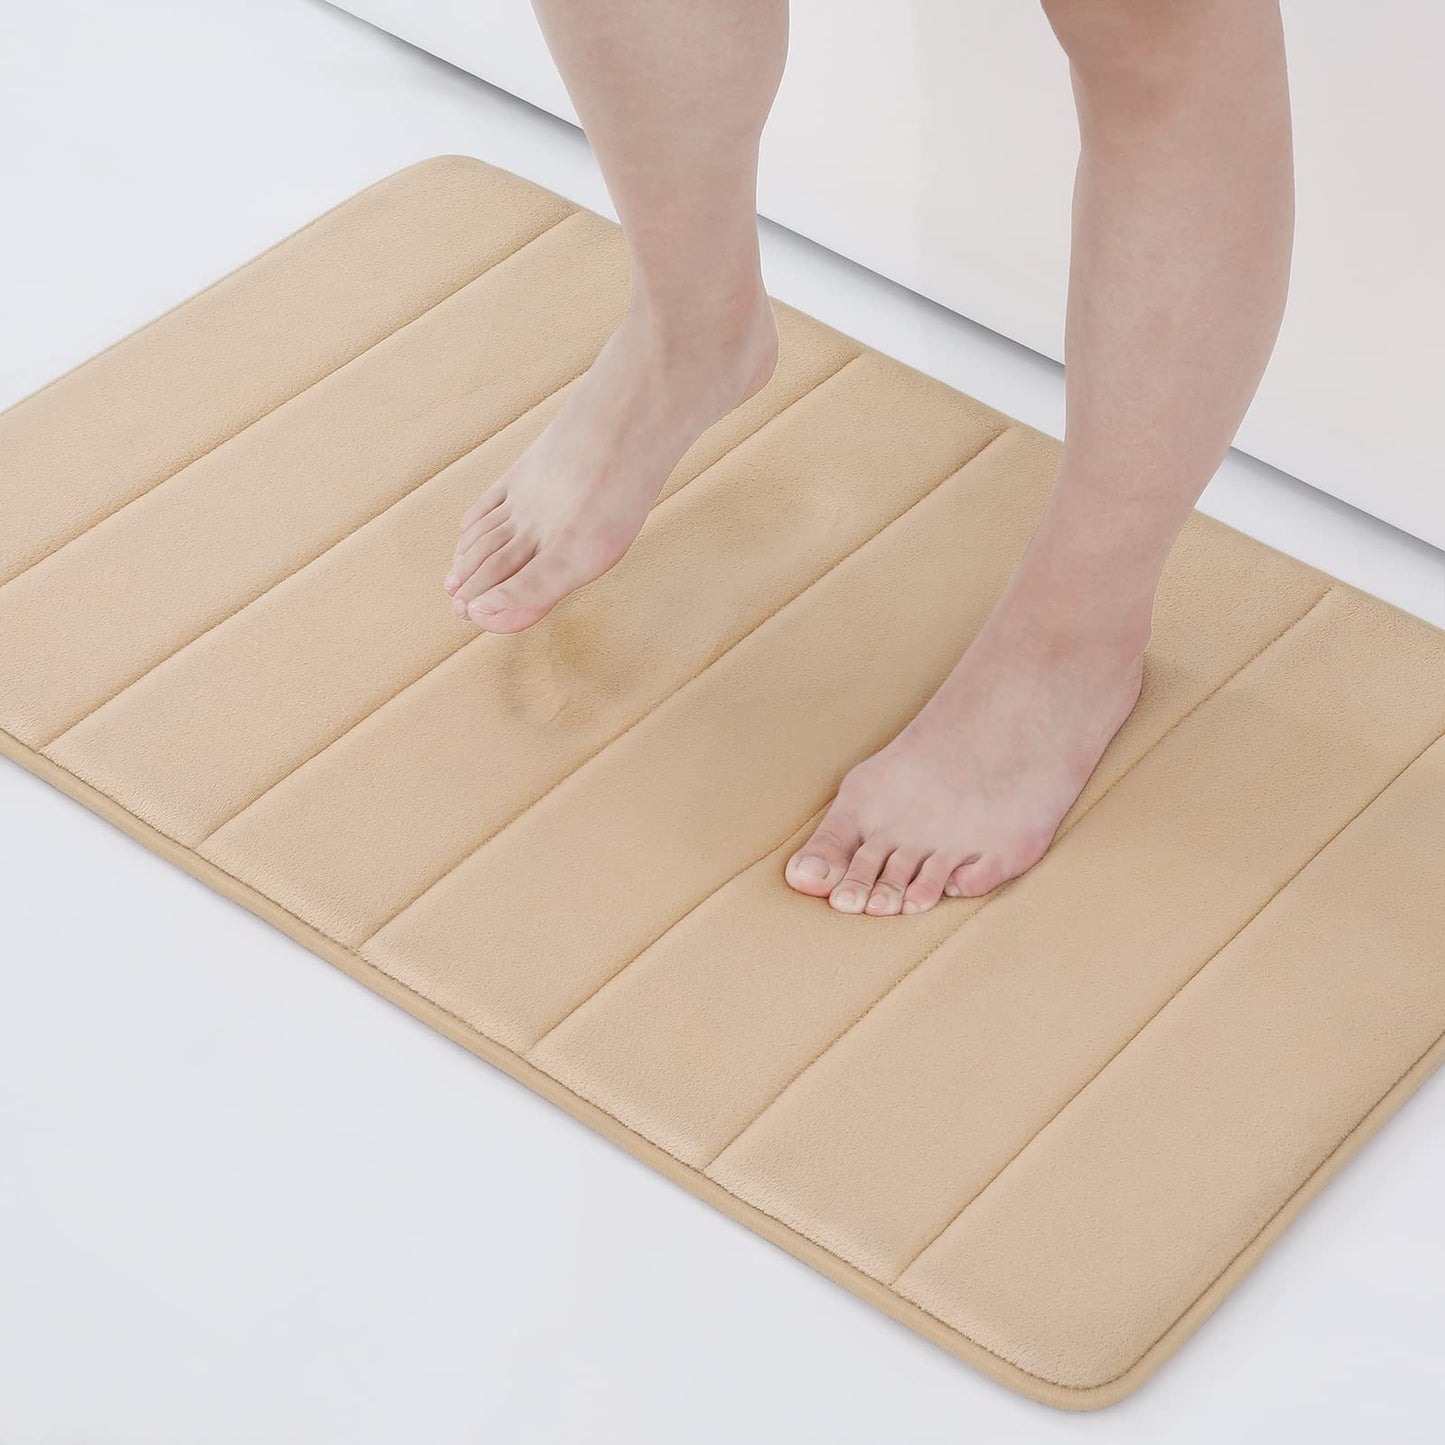 Memory Foam Bath Mat Anti-Slip Shower Carpet Soft Foot Pad Decoration Floor Protector Absorbent Quick Dry Bathroom Rug Mats & Rugs DailyAlertDeals 43x61cm(17x24inch) China beige 2